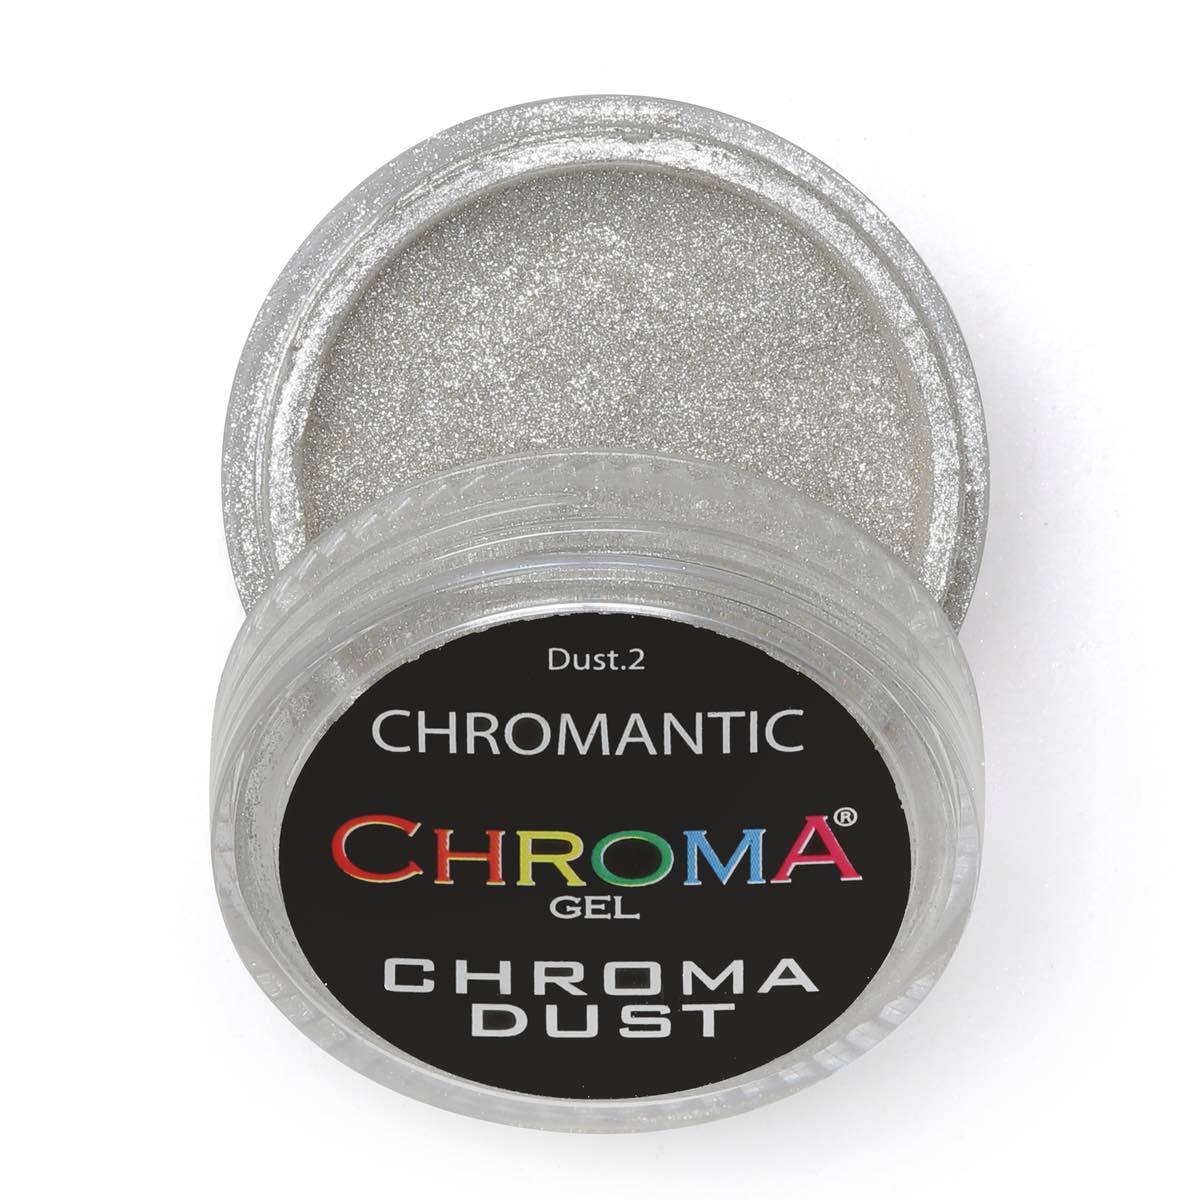 Chroma Dust No.2 Chromantic Chrome Powder - Mirror Nails 2g - Beauty Hair Products Ltd